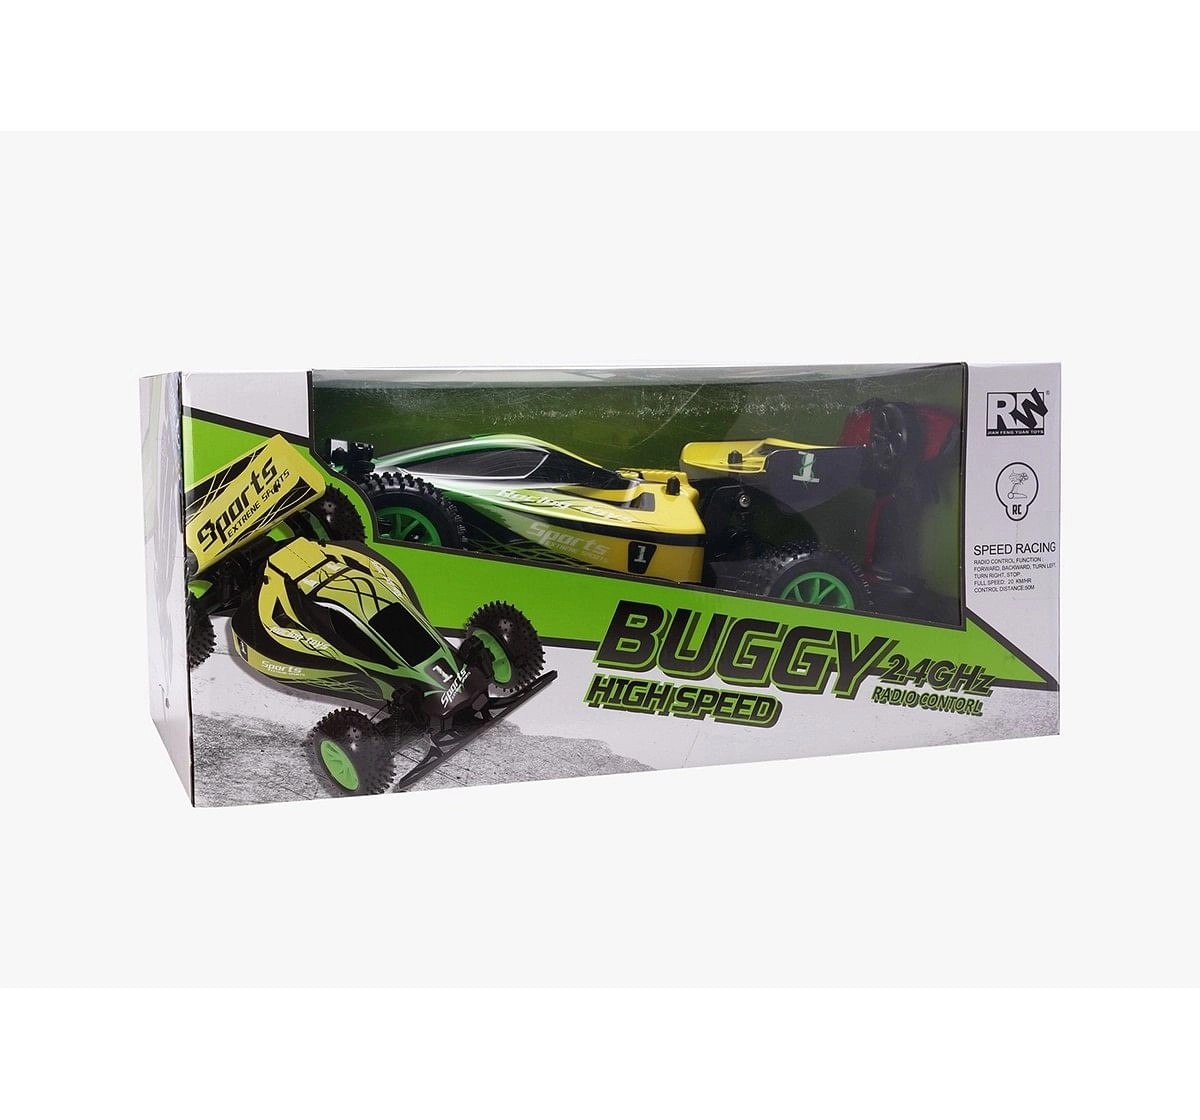 RW 1:10 2.4G Buggy Remote Control Car Green Remote Control Toys for Kids age 6Y+ (Green)